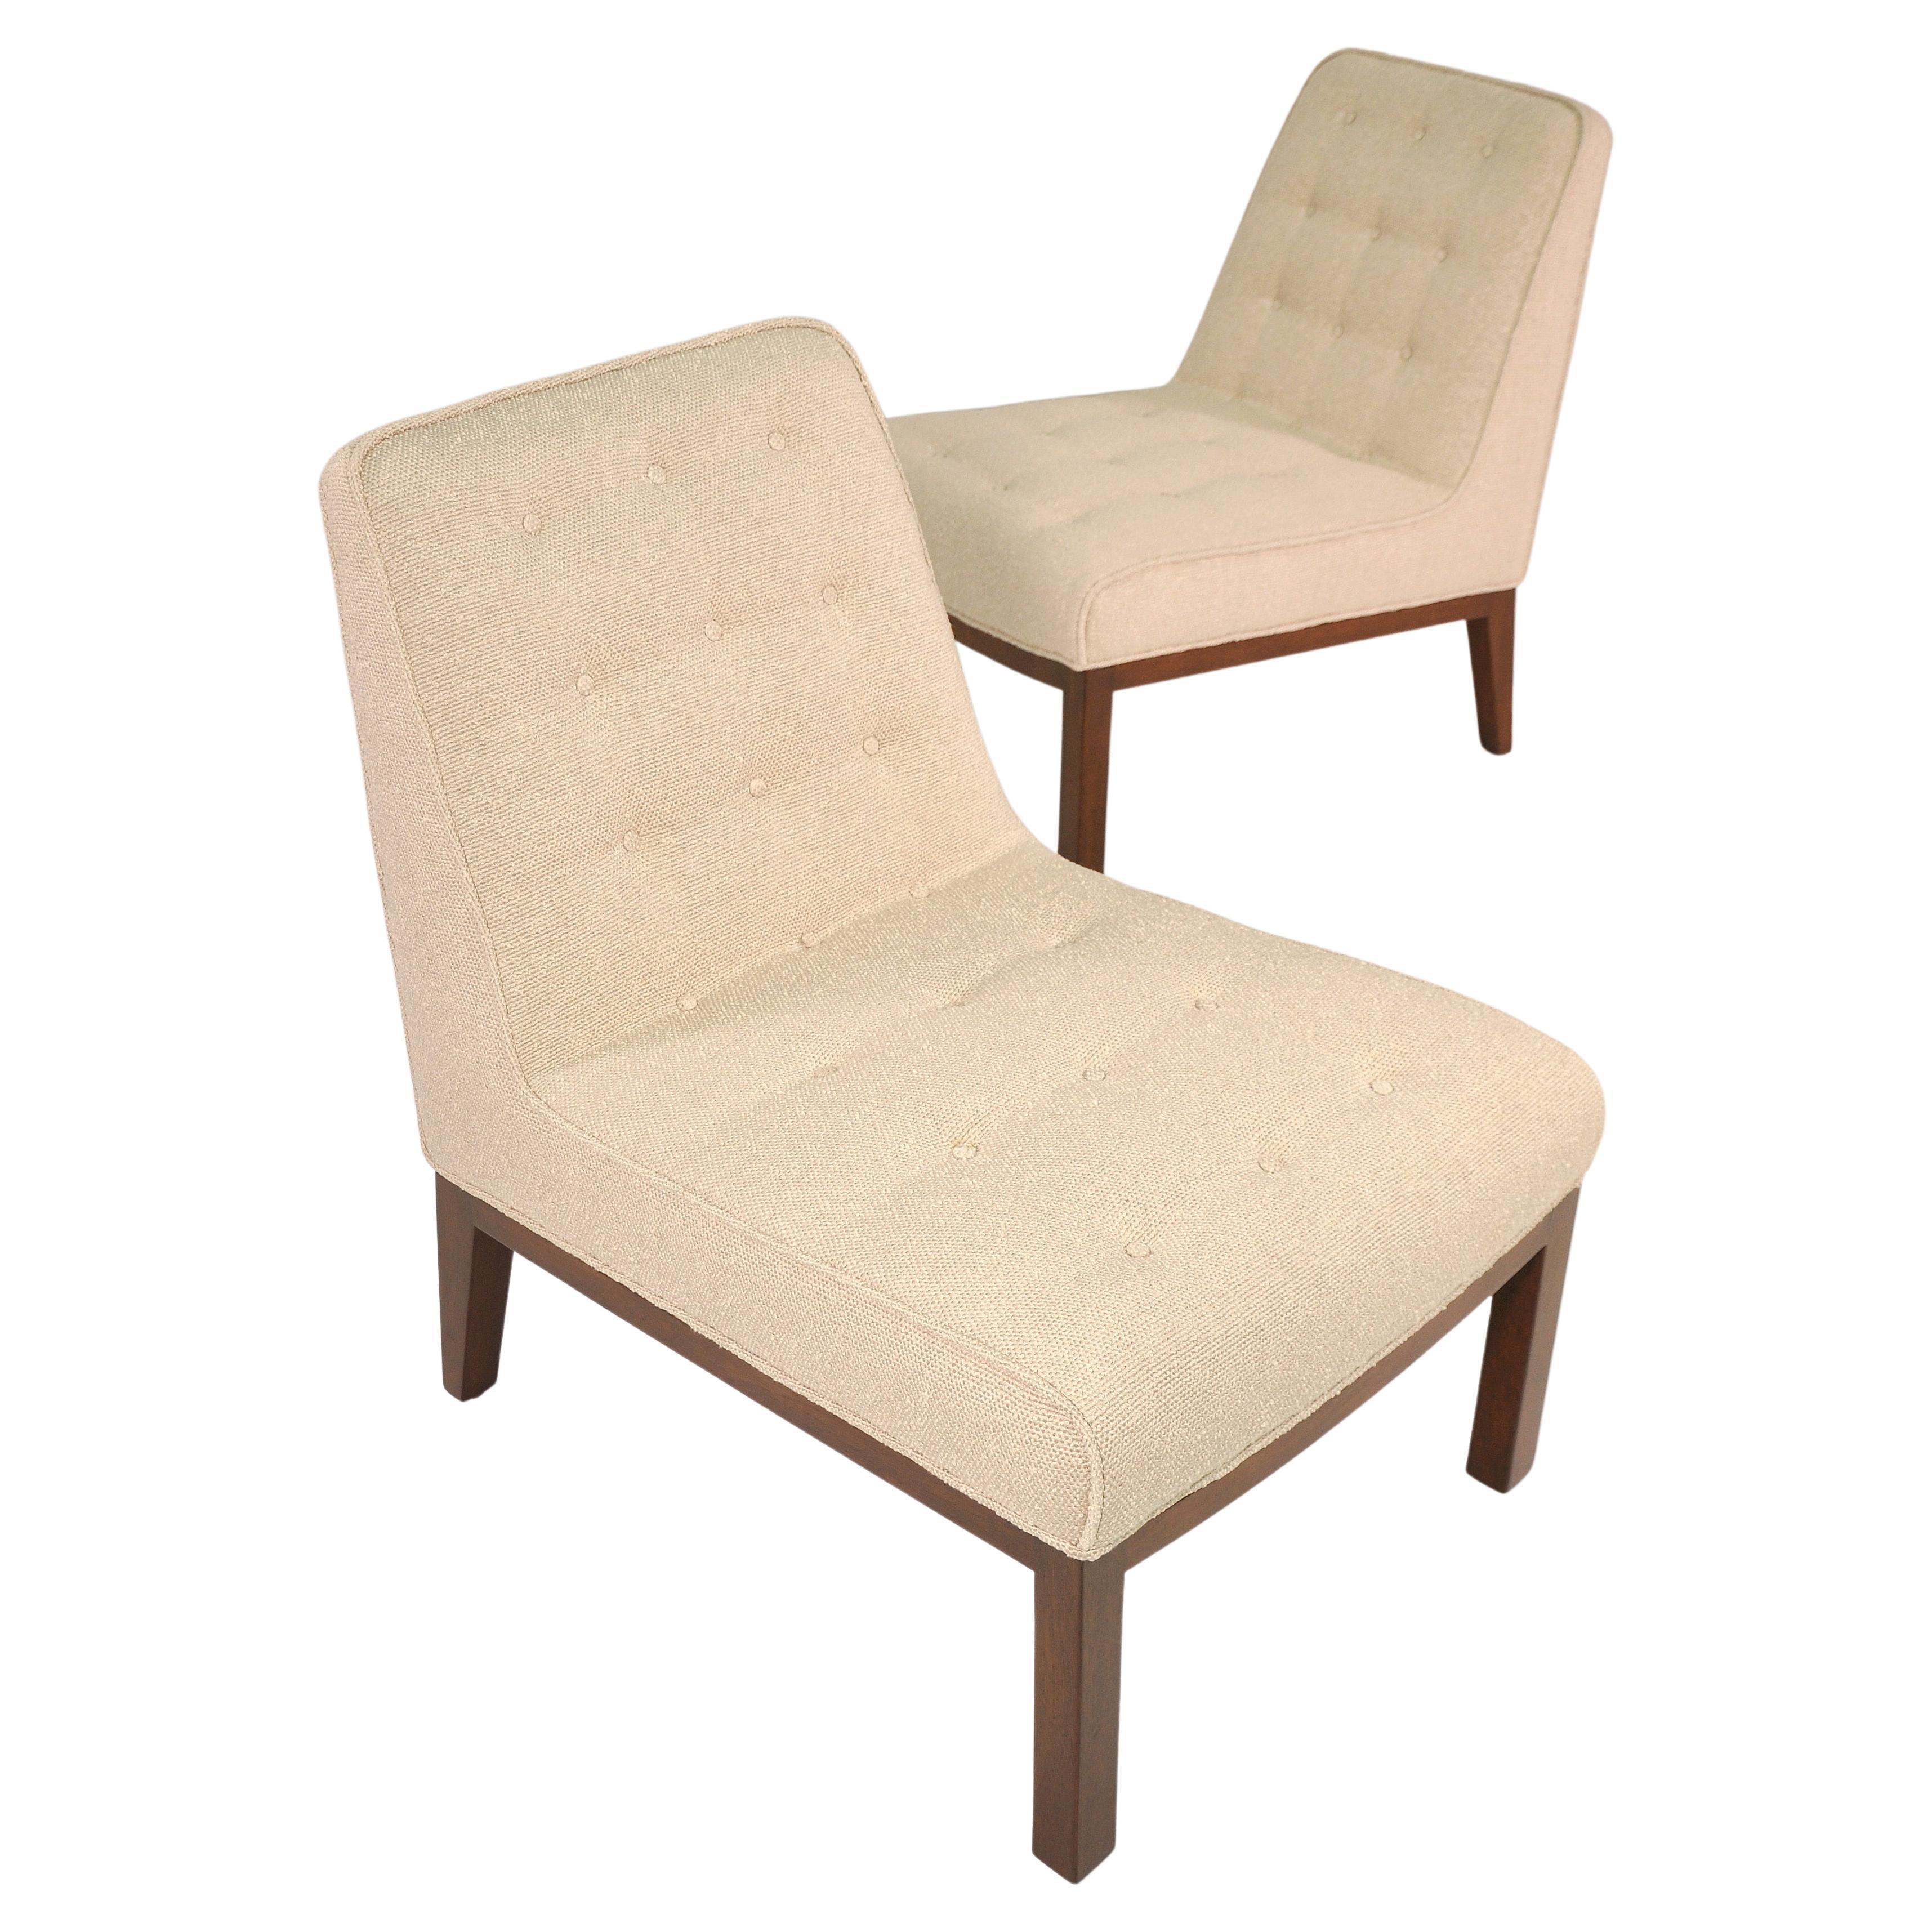 Mahogany Ecru Beige Boucle Sophia Slipper Chairs by Edward Wormley for Dunbar For Sale